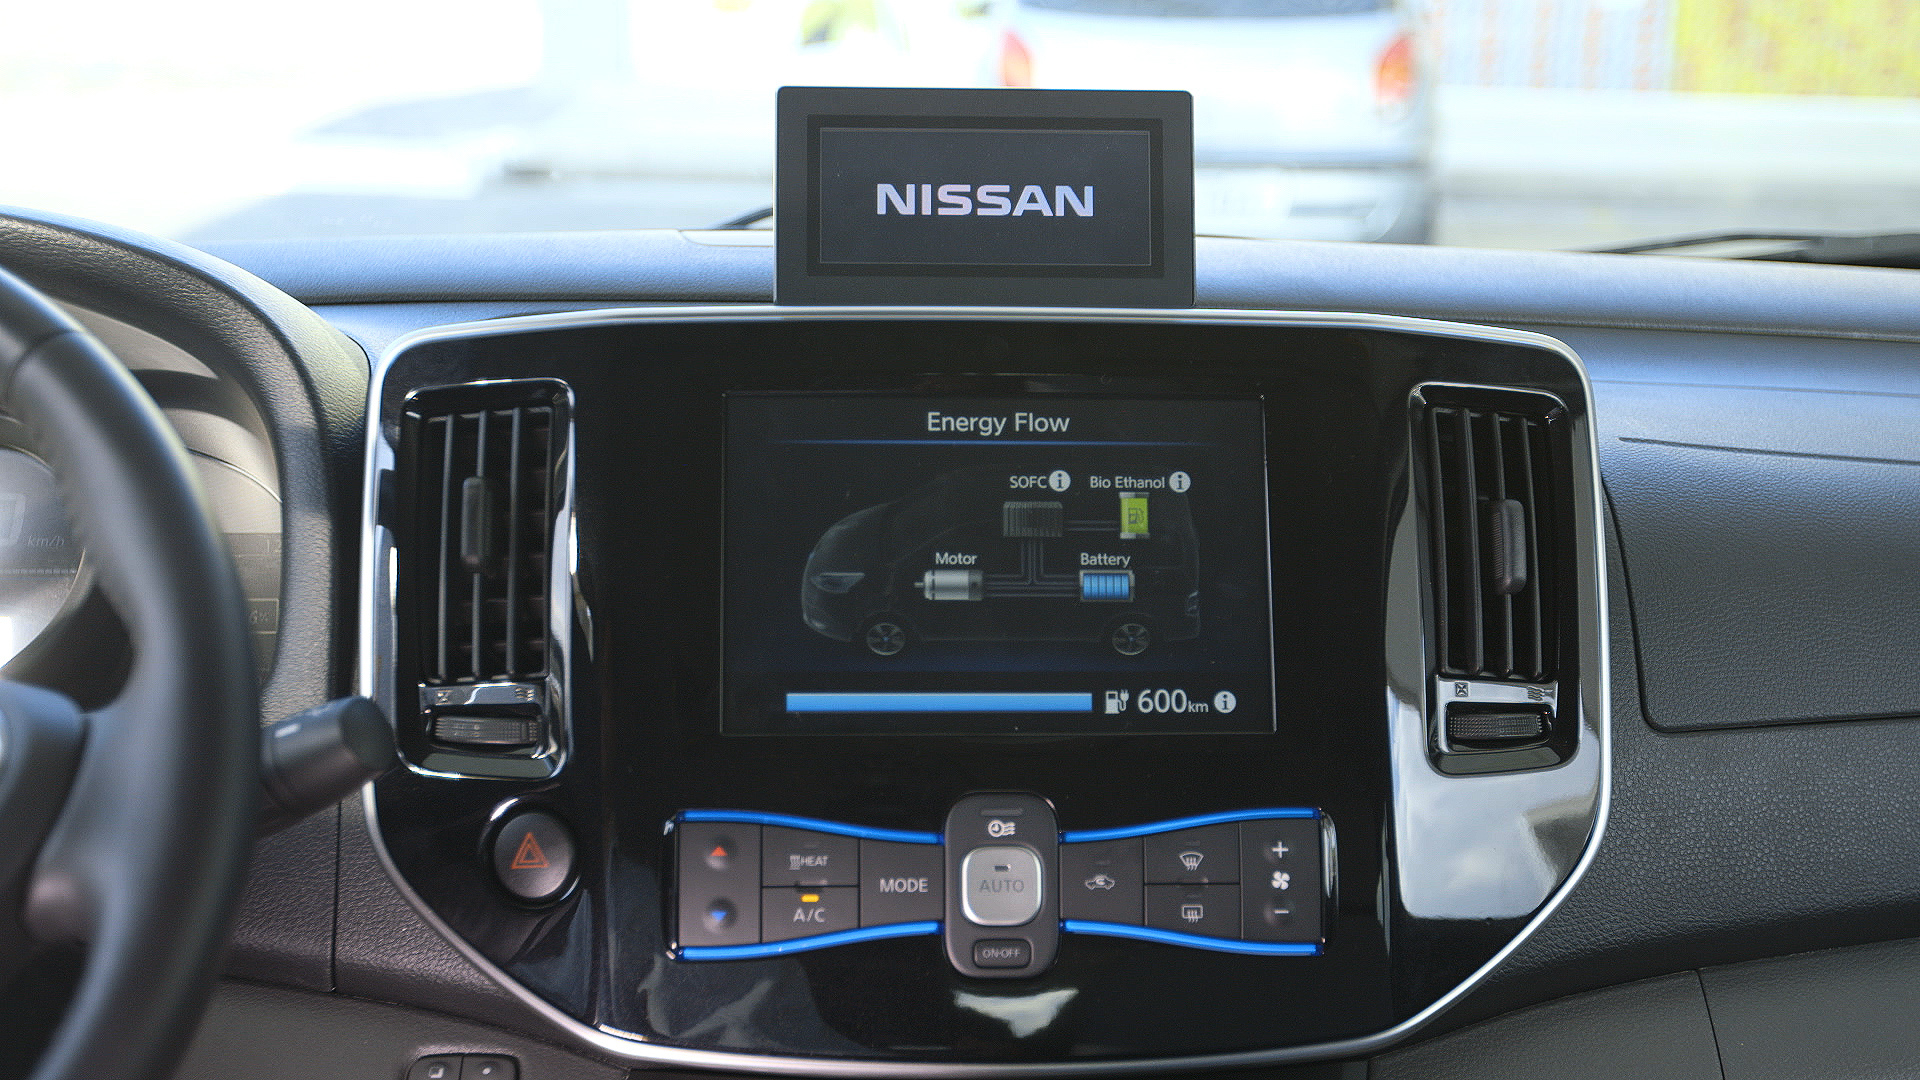 Nissan e-Bio Fuel-Cell Prototype Vehicle © Nissan Motor Co., Ltd.